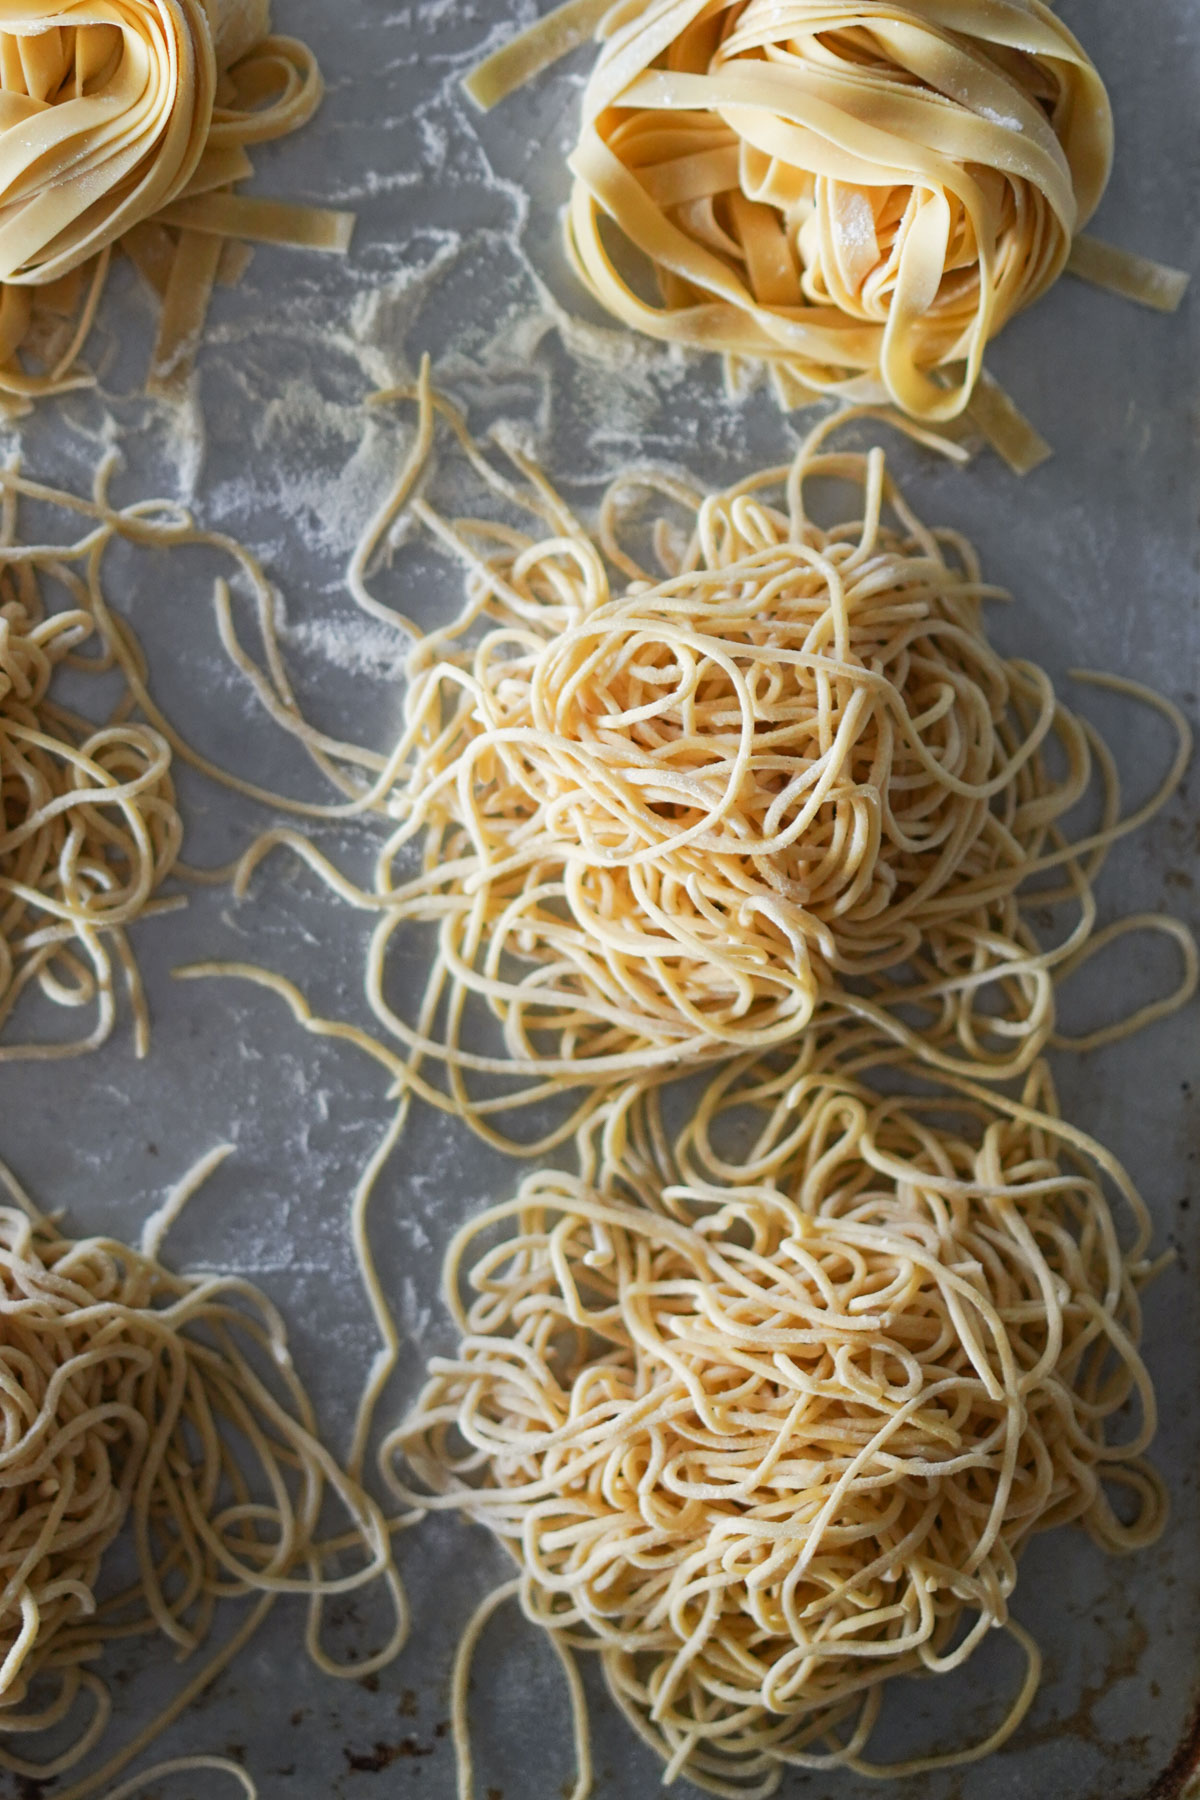 nests of taglioni pasta (looks like spaghetti!)